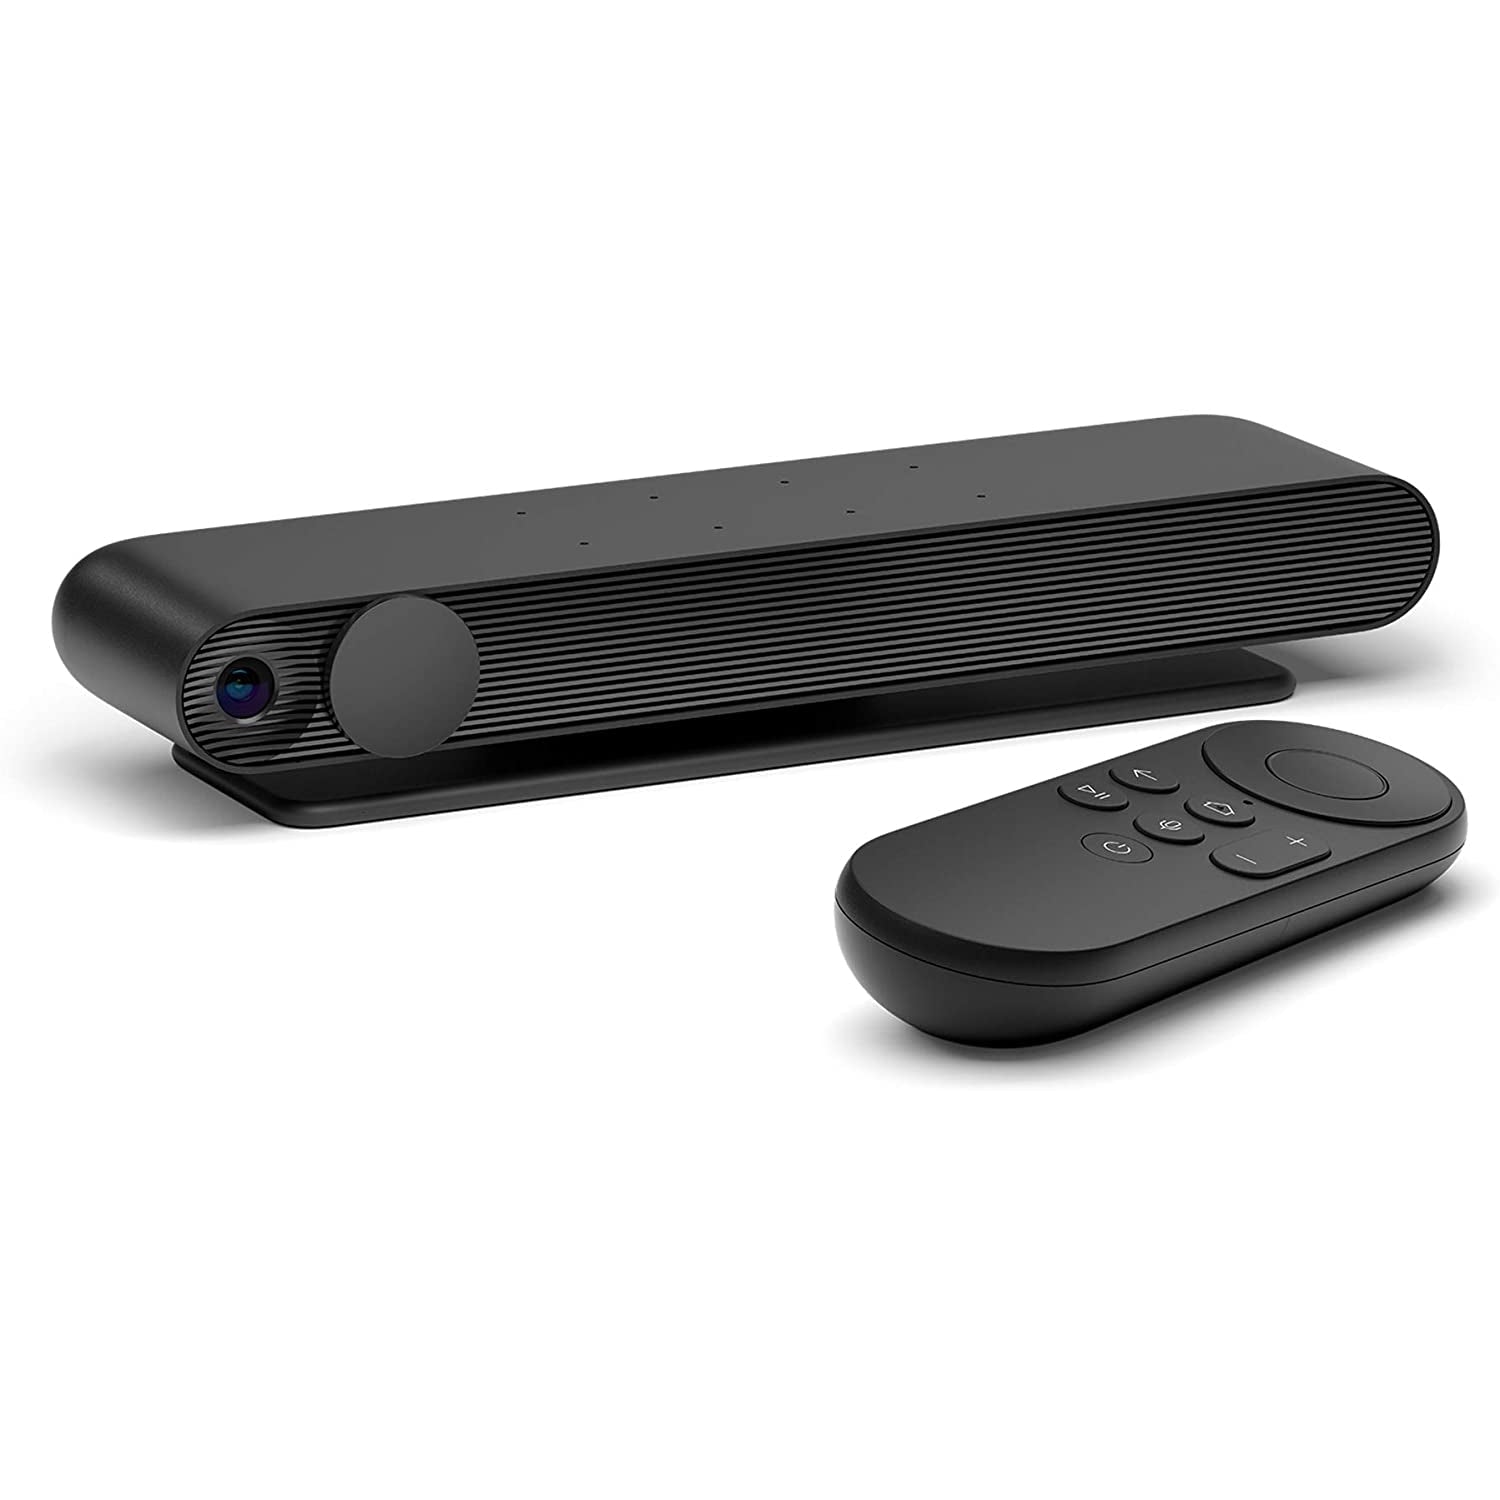 Portal TV from Facebook Smart Video Calling Camera - Black